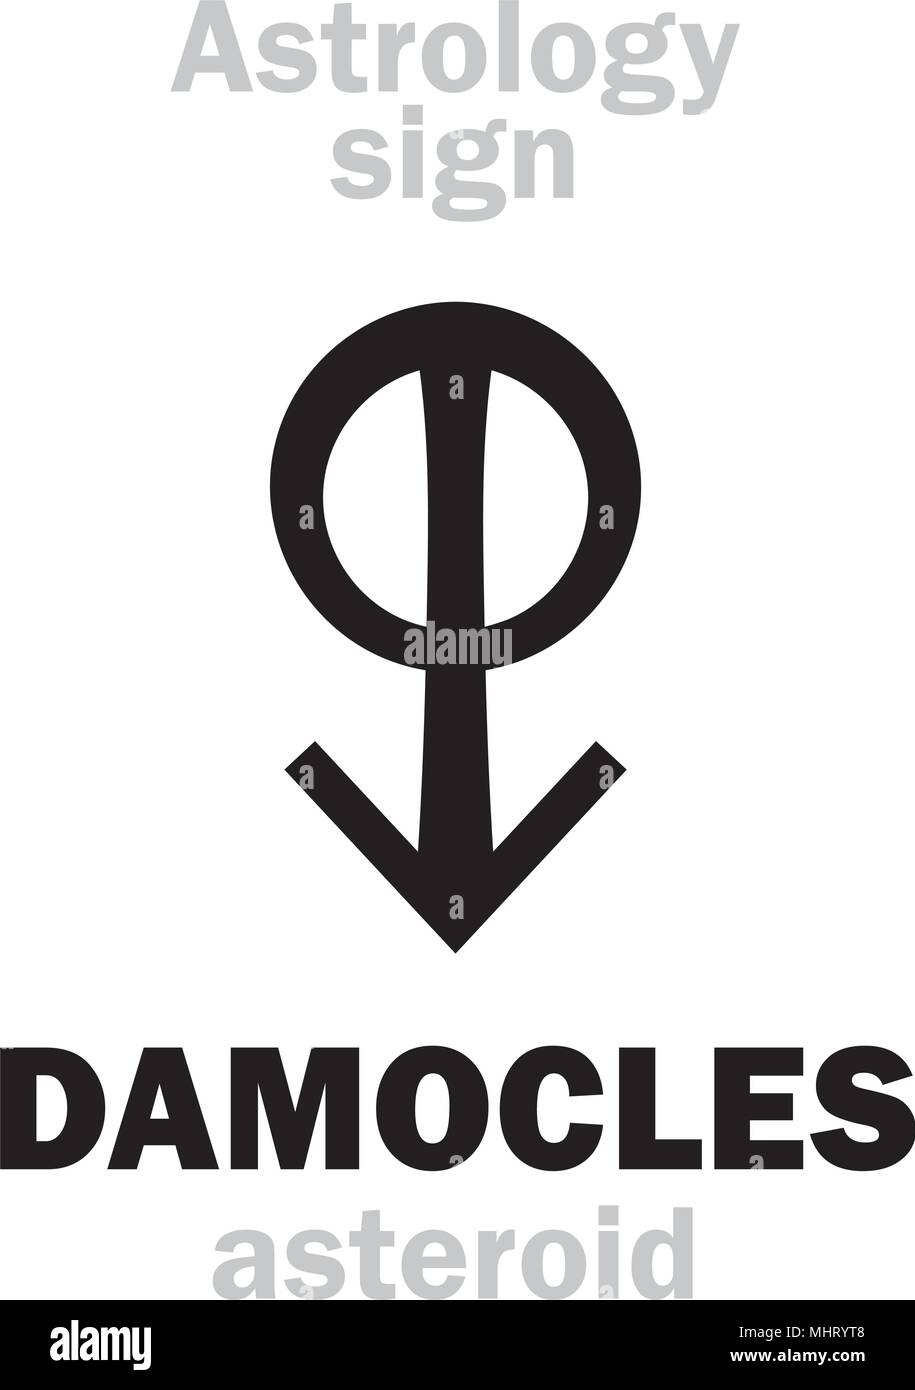 Astrology Alphabet: DAMOCLES, dangerous asteroid. Hieroglyphics character sign (single symbol). Stock Vector